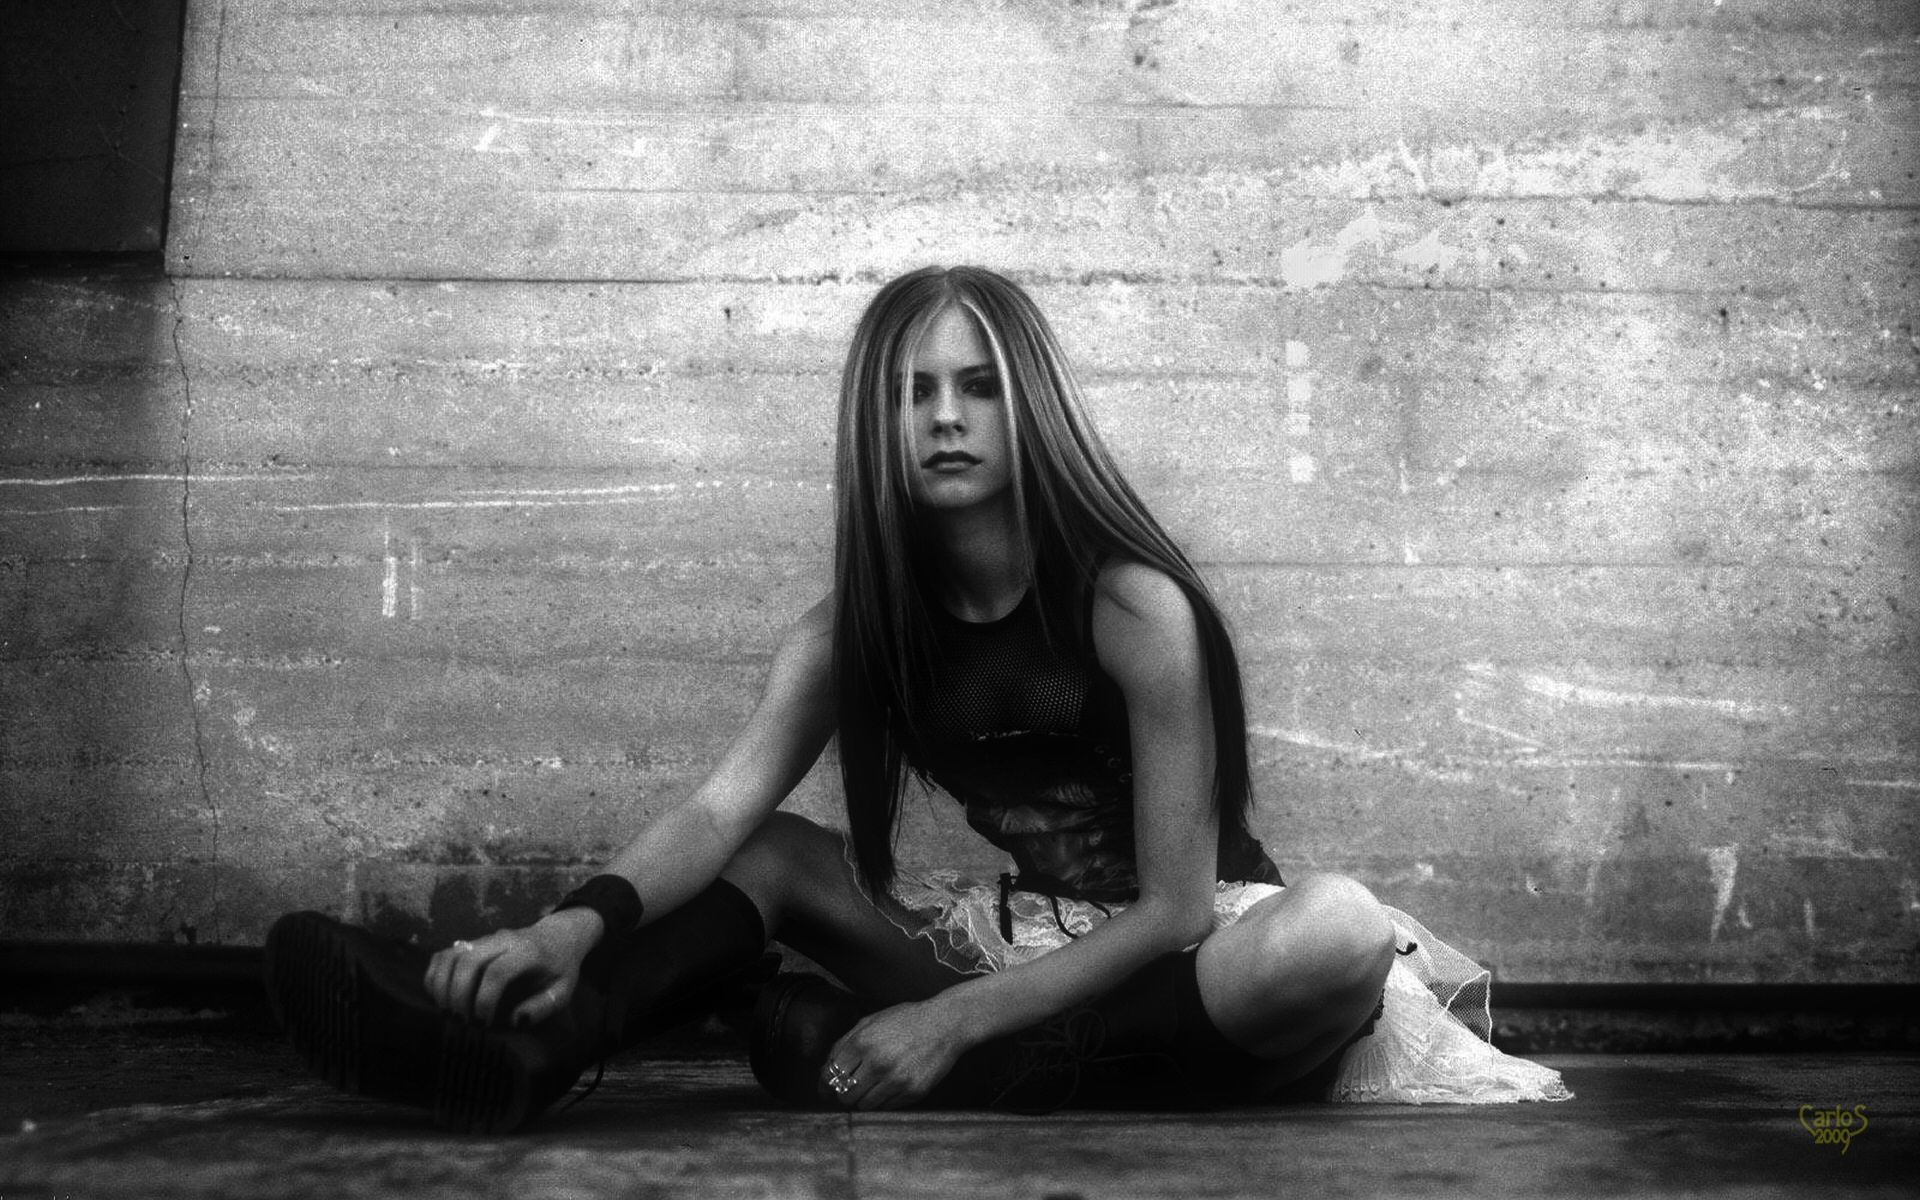 Avril Lavigne 美しい壁紙 2 7 19x10 壁紙ダウンロード Avril Lavigne 美しい壁紙 2 人 壁紙 V3の壁紙